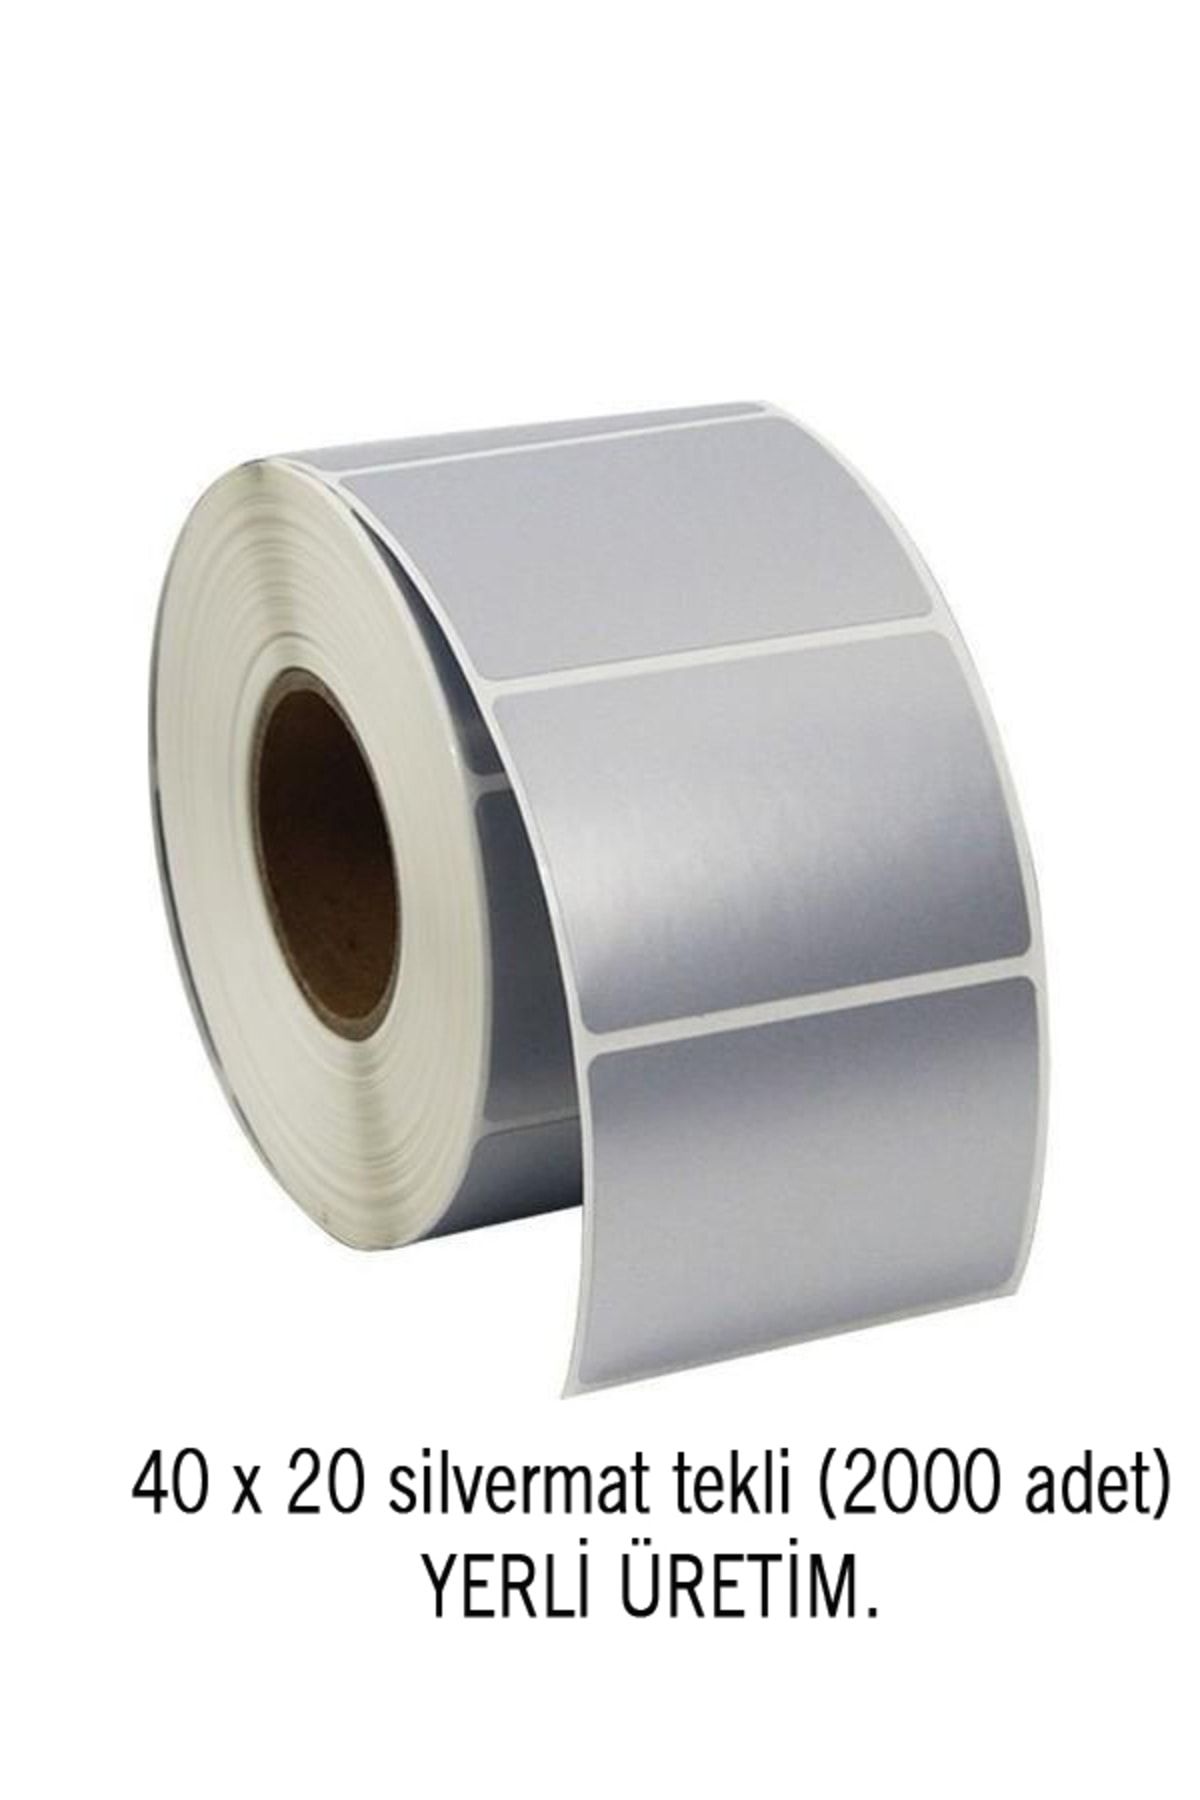 GDL Retro 40x20 Silvermat Etiket | Rulo Demirbaş Etiketi (2000 Adet) Yerli Üretim